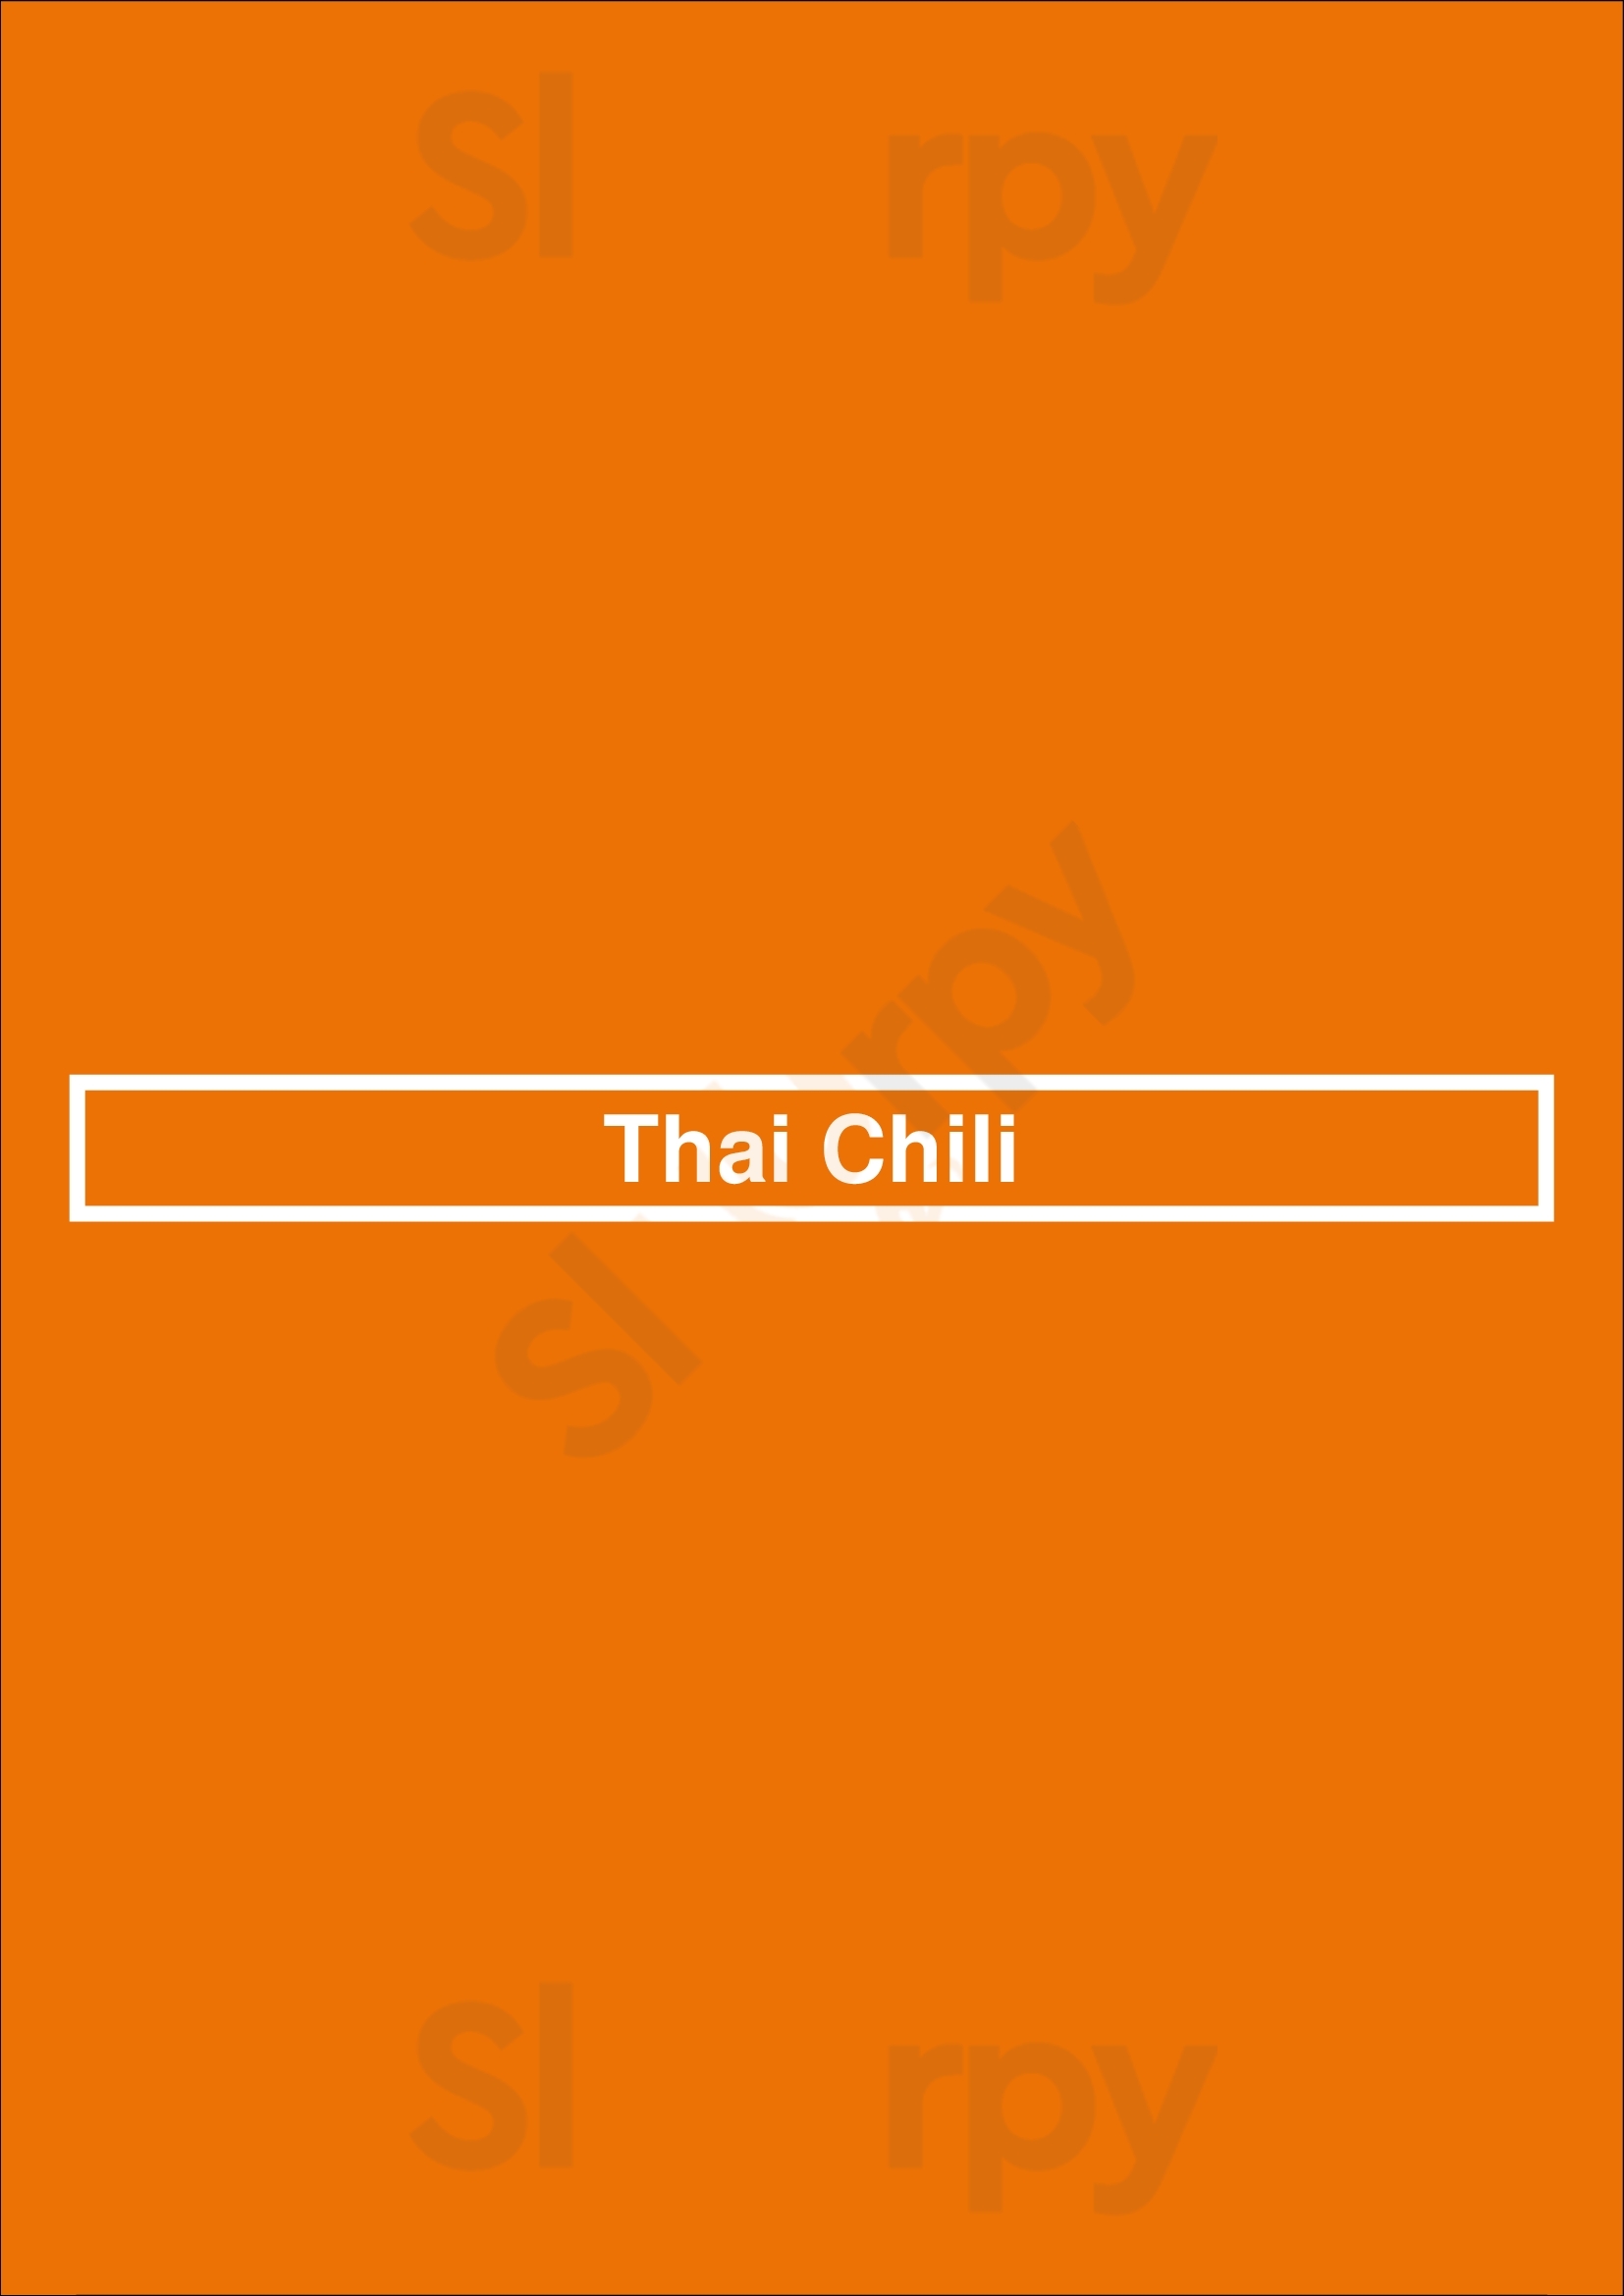 Thai Chili Atlanta Menu - 1